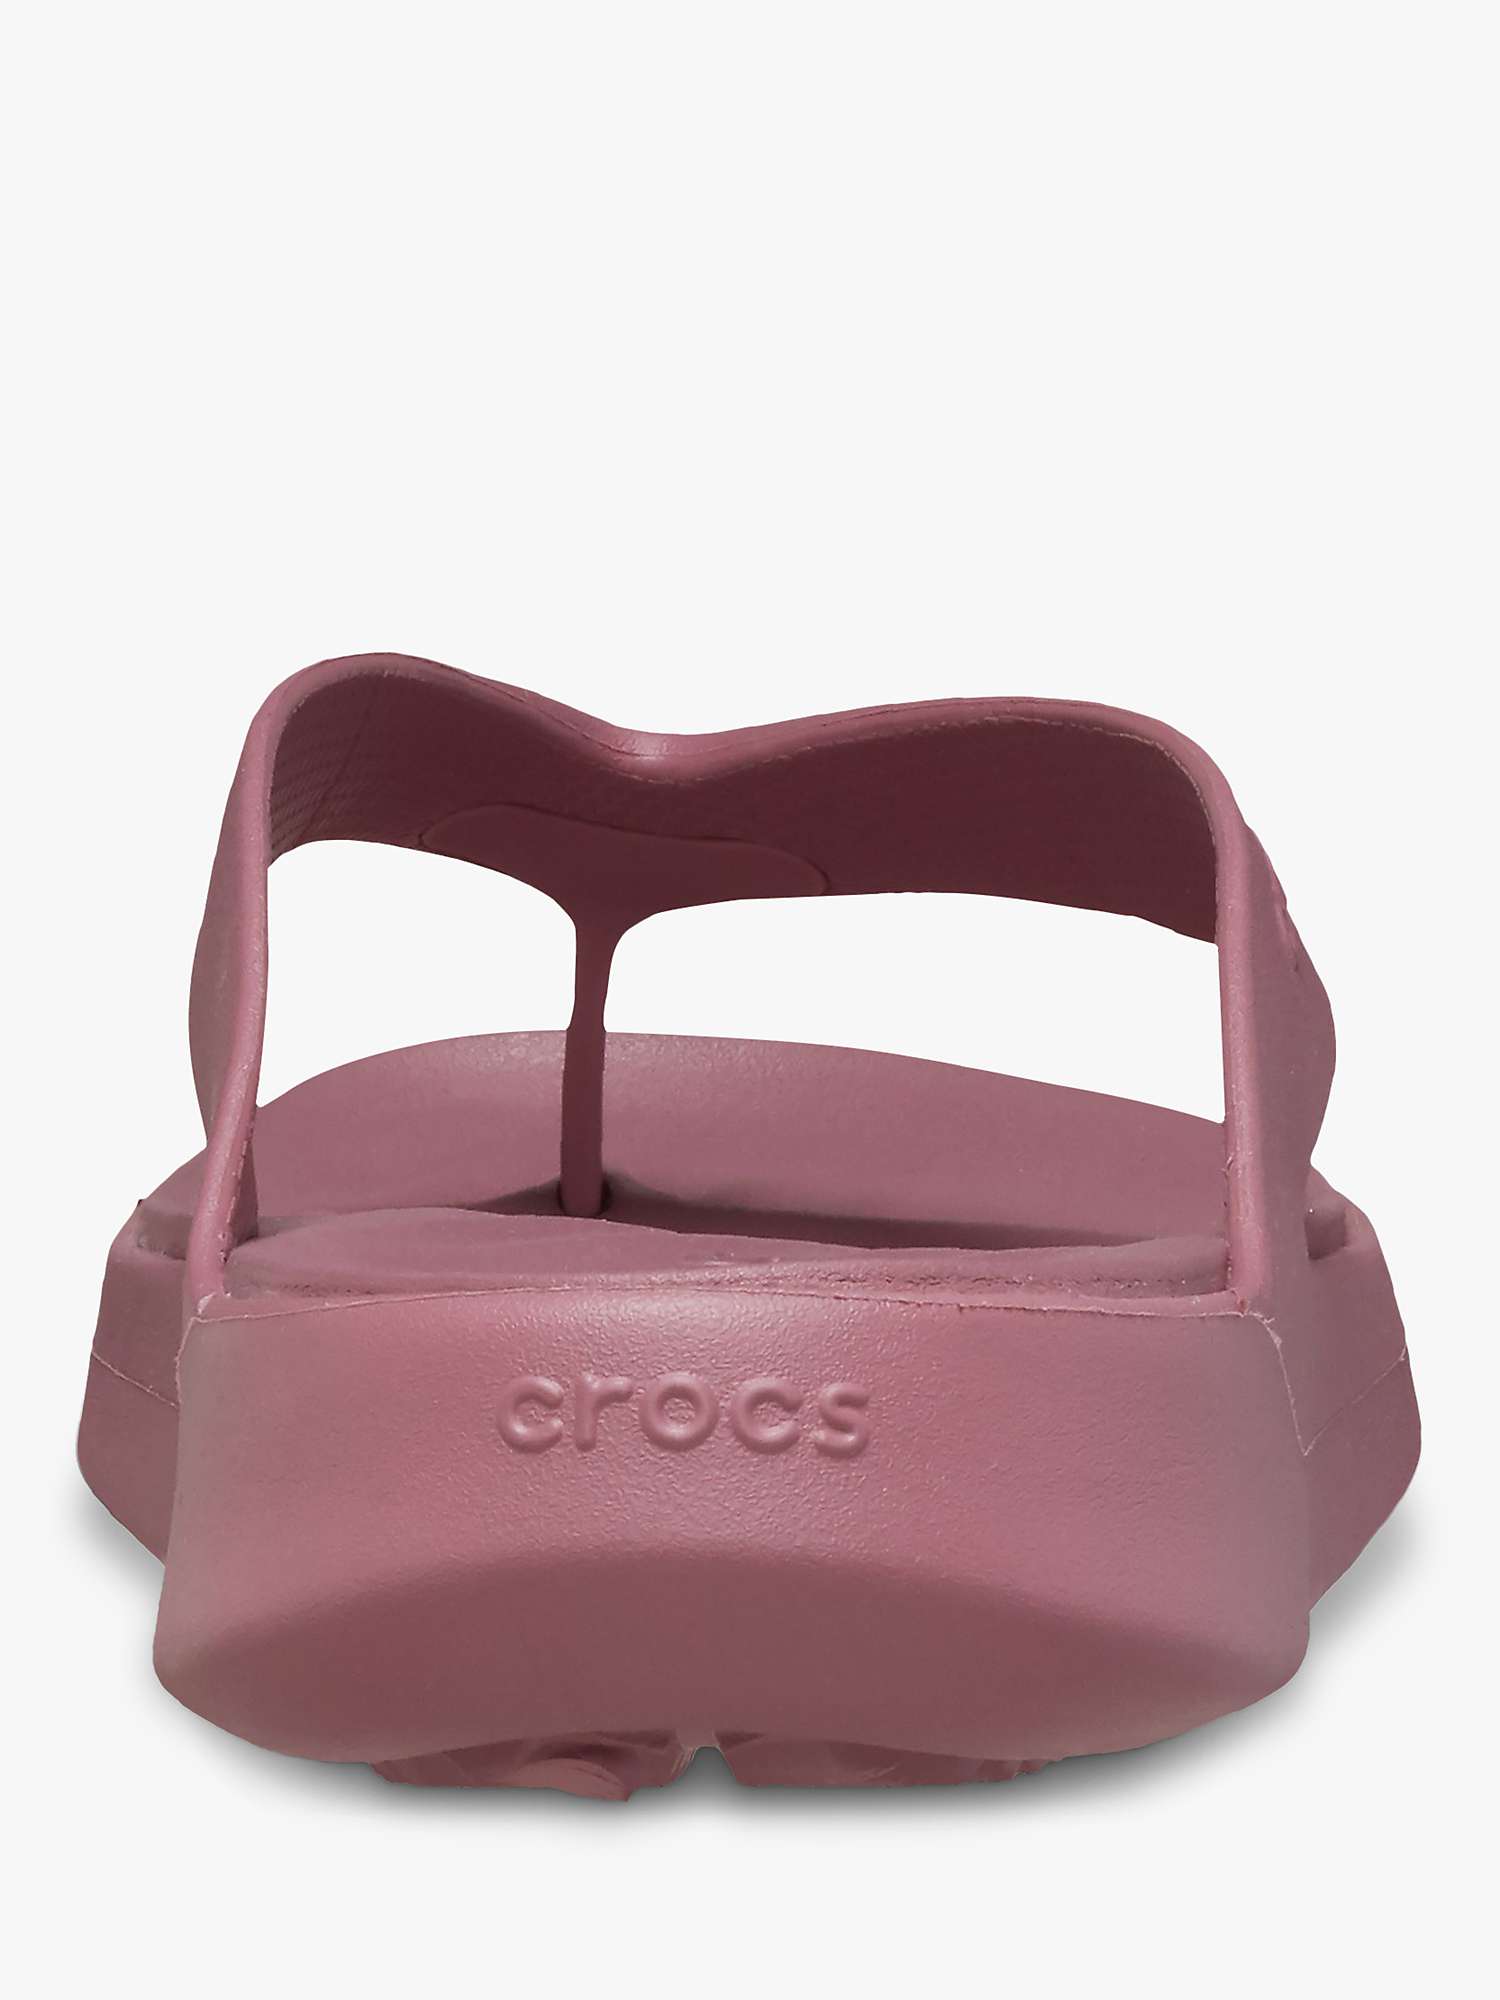 Buy Crocs Getaway Flip-Flops, Dark Pink Online at johnlewis.com